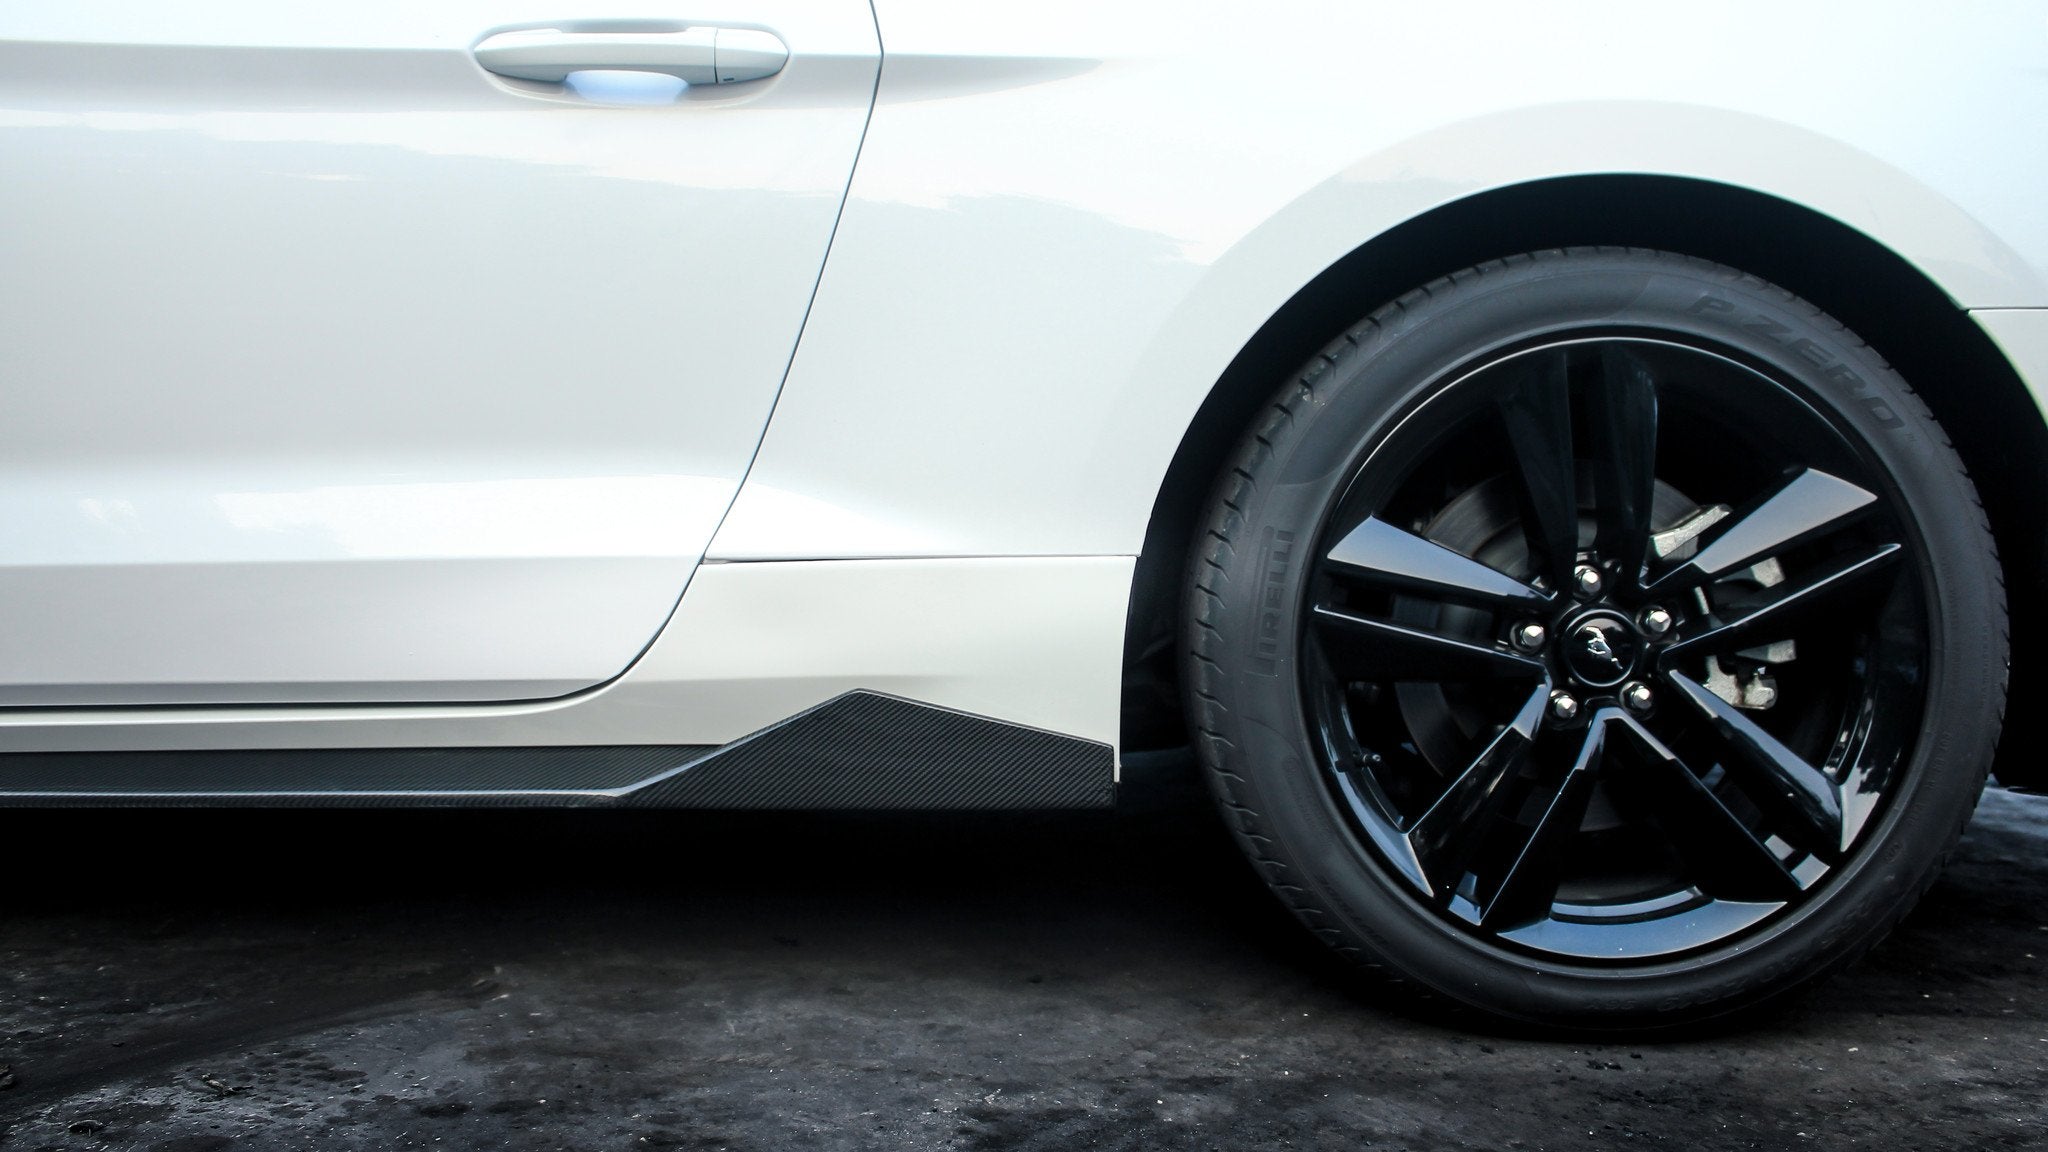 Ventus Veloce Carbon Fiber Side Skirts for 2015 - 2017 Ford Mustang S550.1